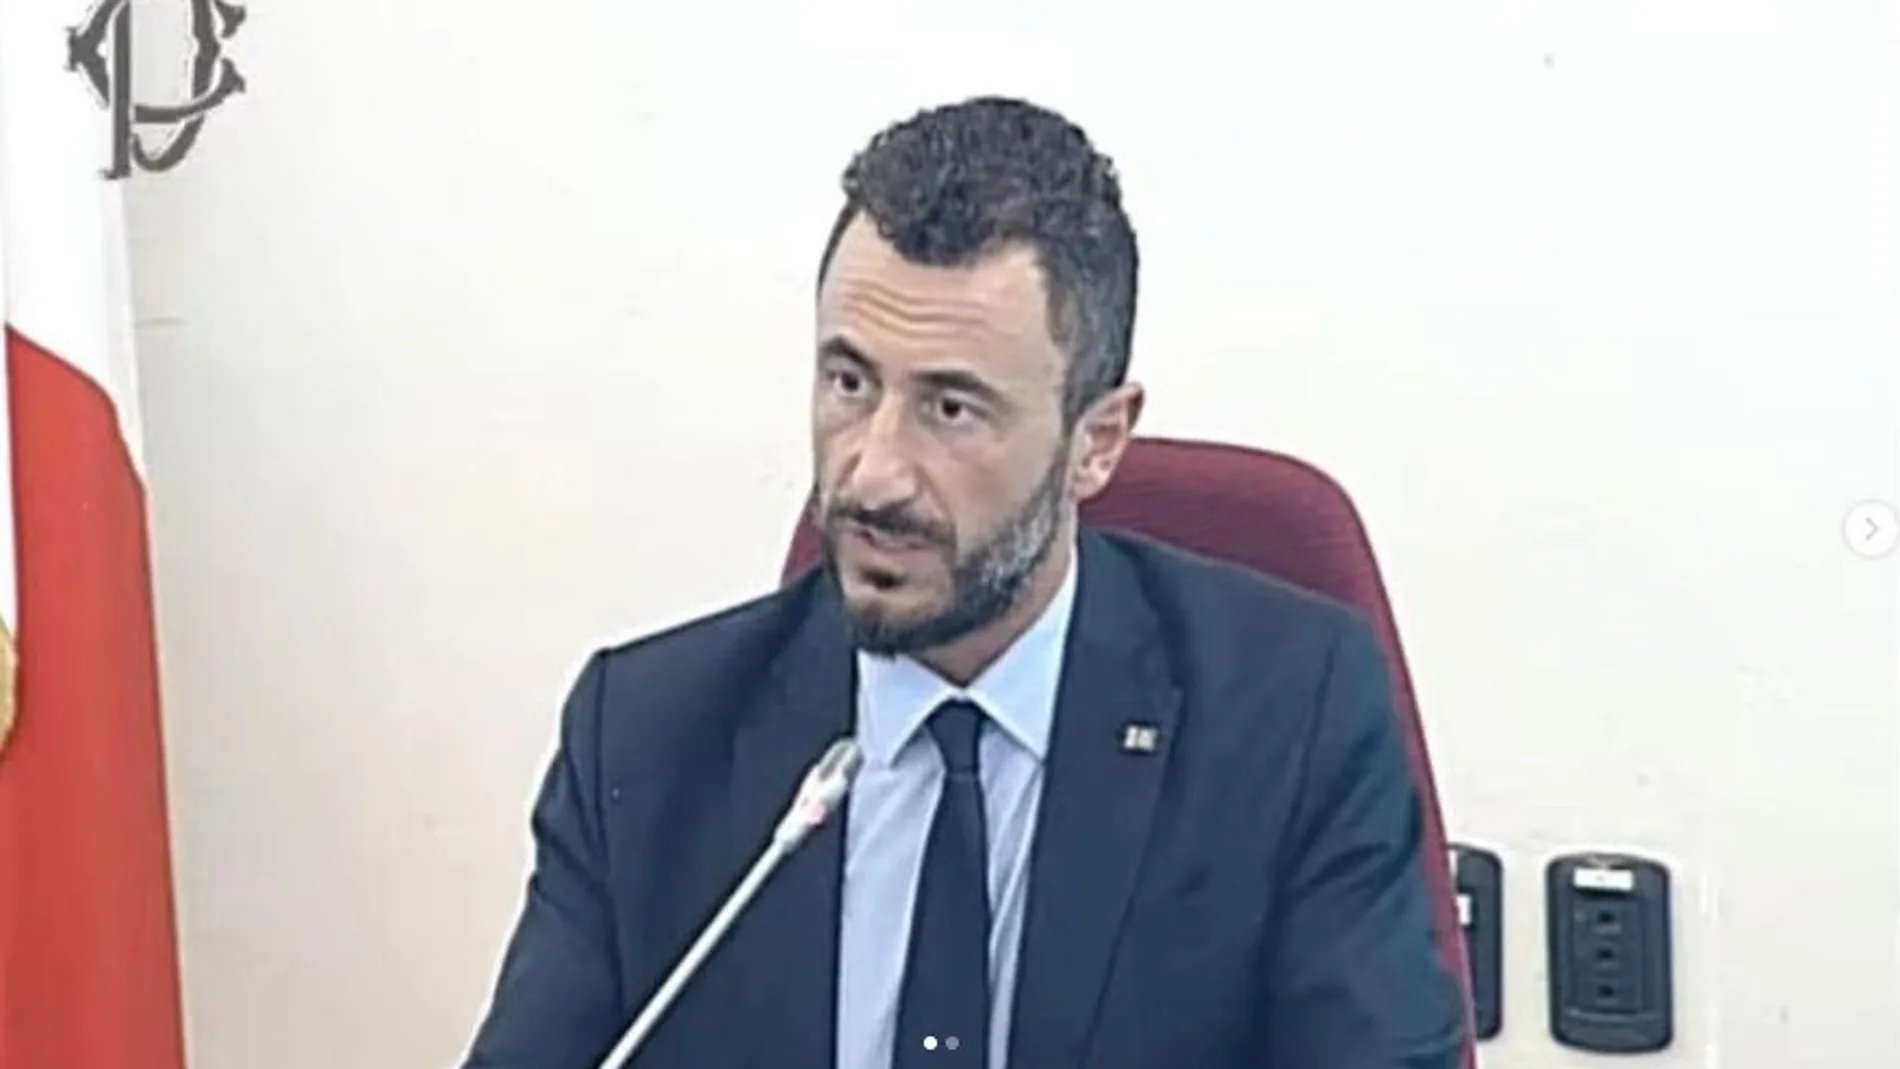 Emanuele Pozzolo, diputado italiano